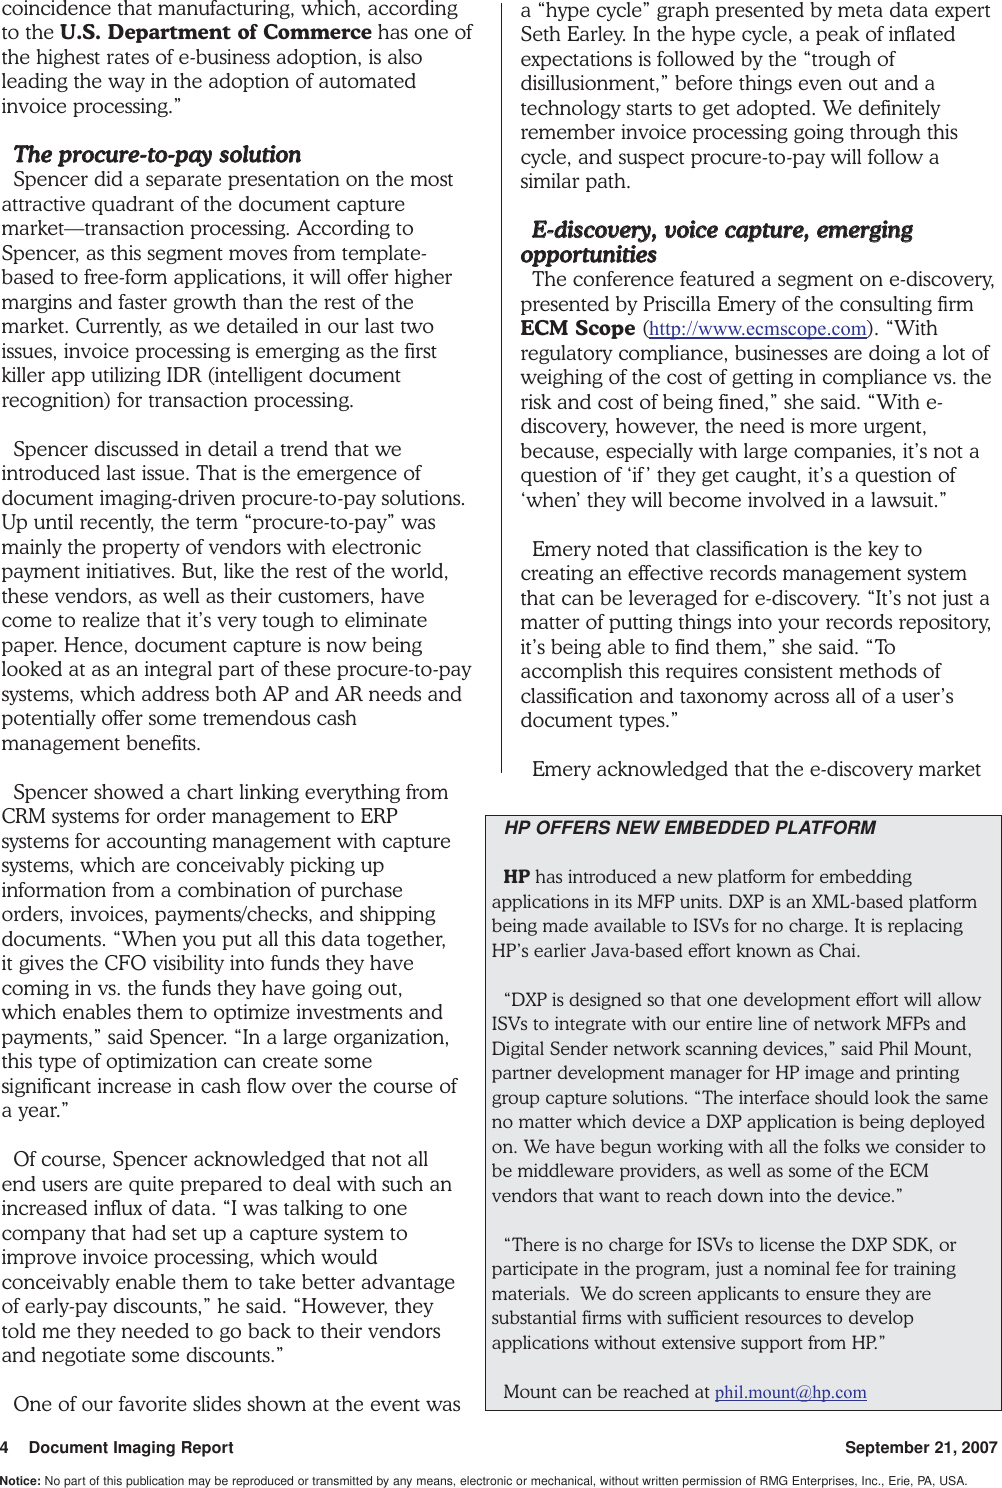 Page 4 of 8 - Fujitsu DIR 9-21-07 FCPA Upgrades Dept. Scanner Dir-092107 Review